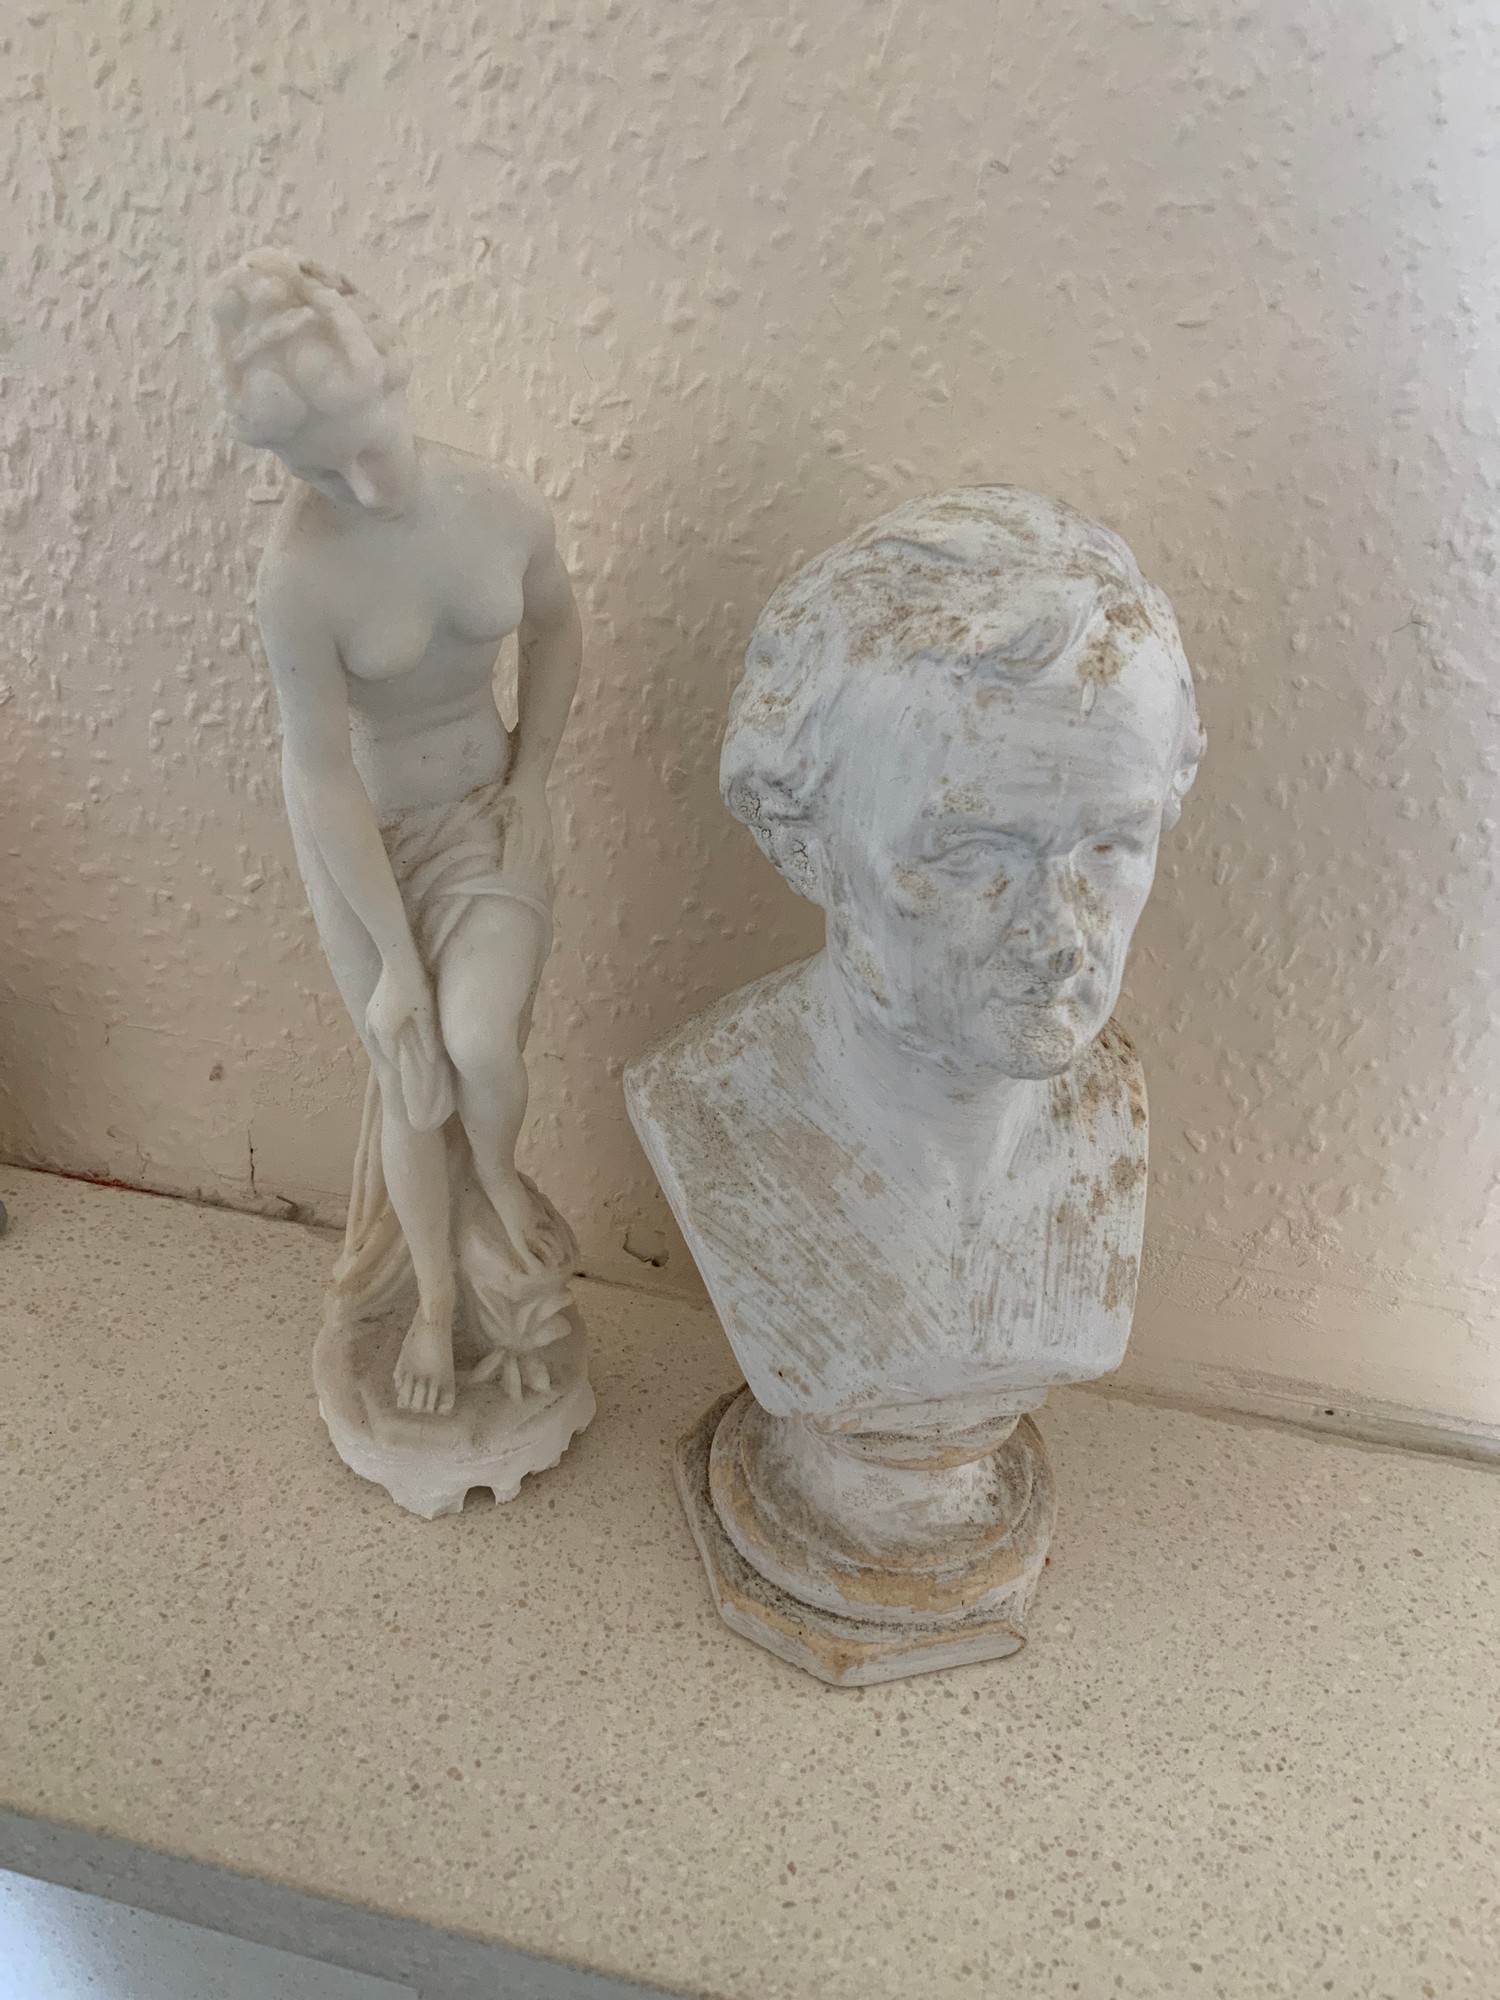 Porcelain Bust and Figurine - 23cm